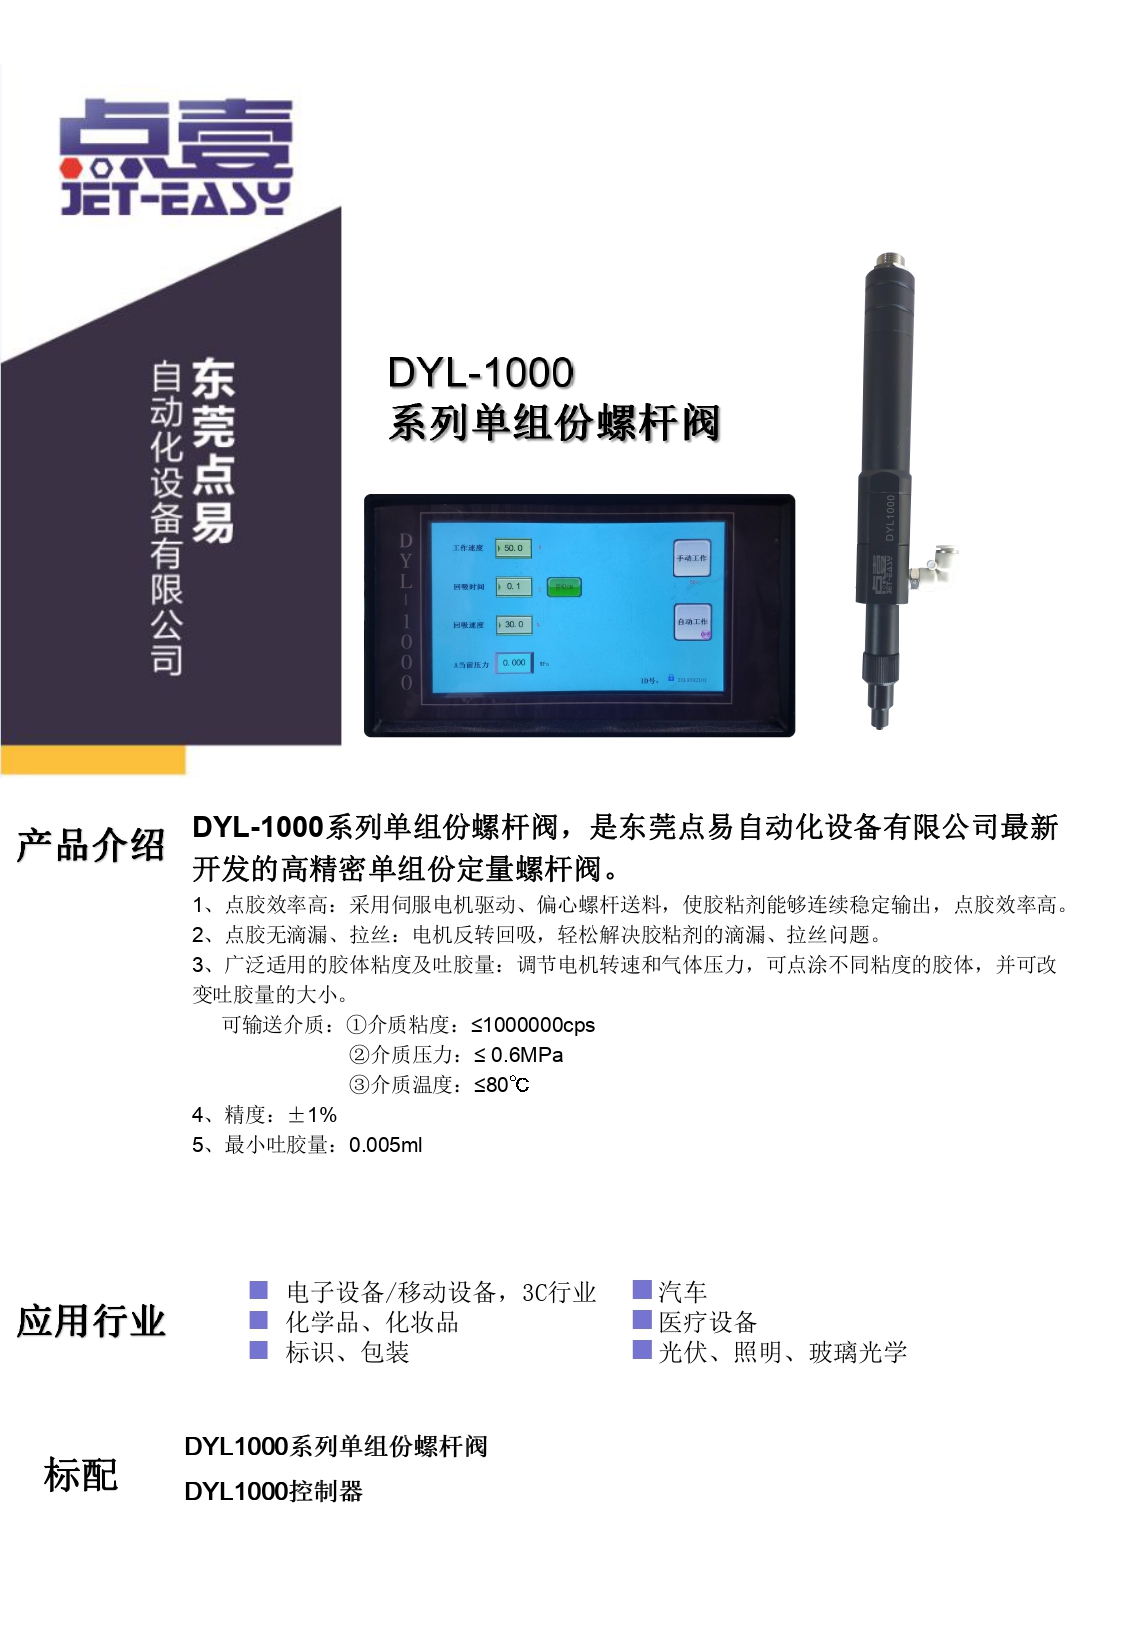 DYL-1000单组份螺杆阀简介资料_page-0001.jpg